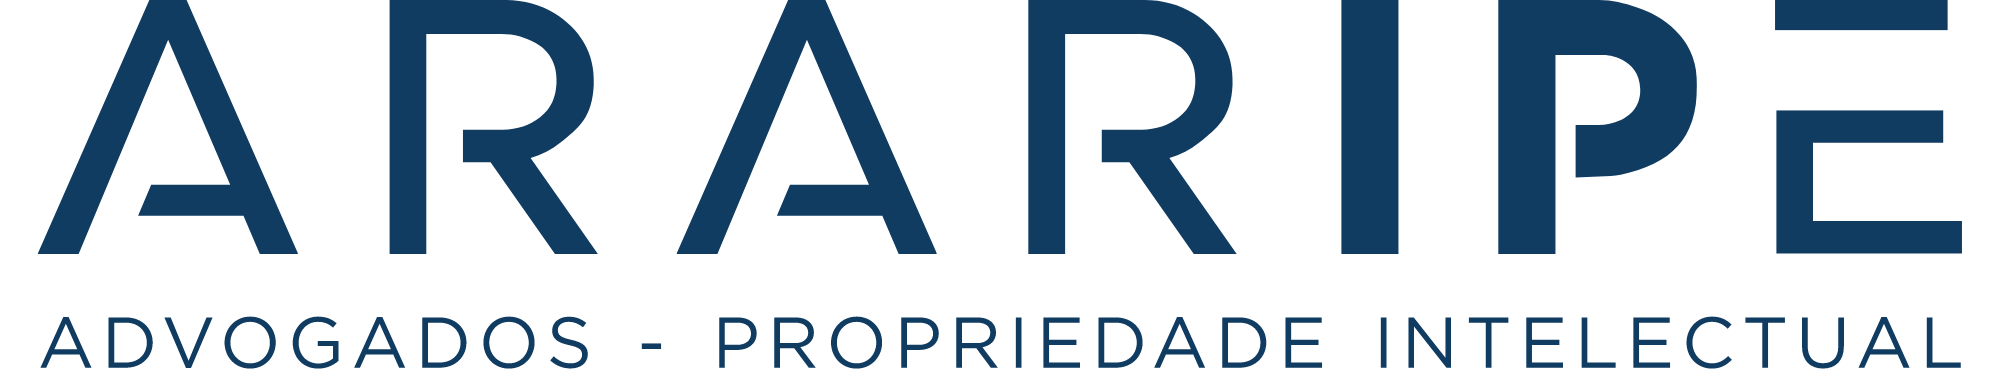 Logo of Araripe